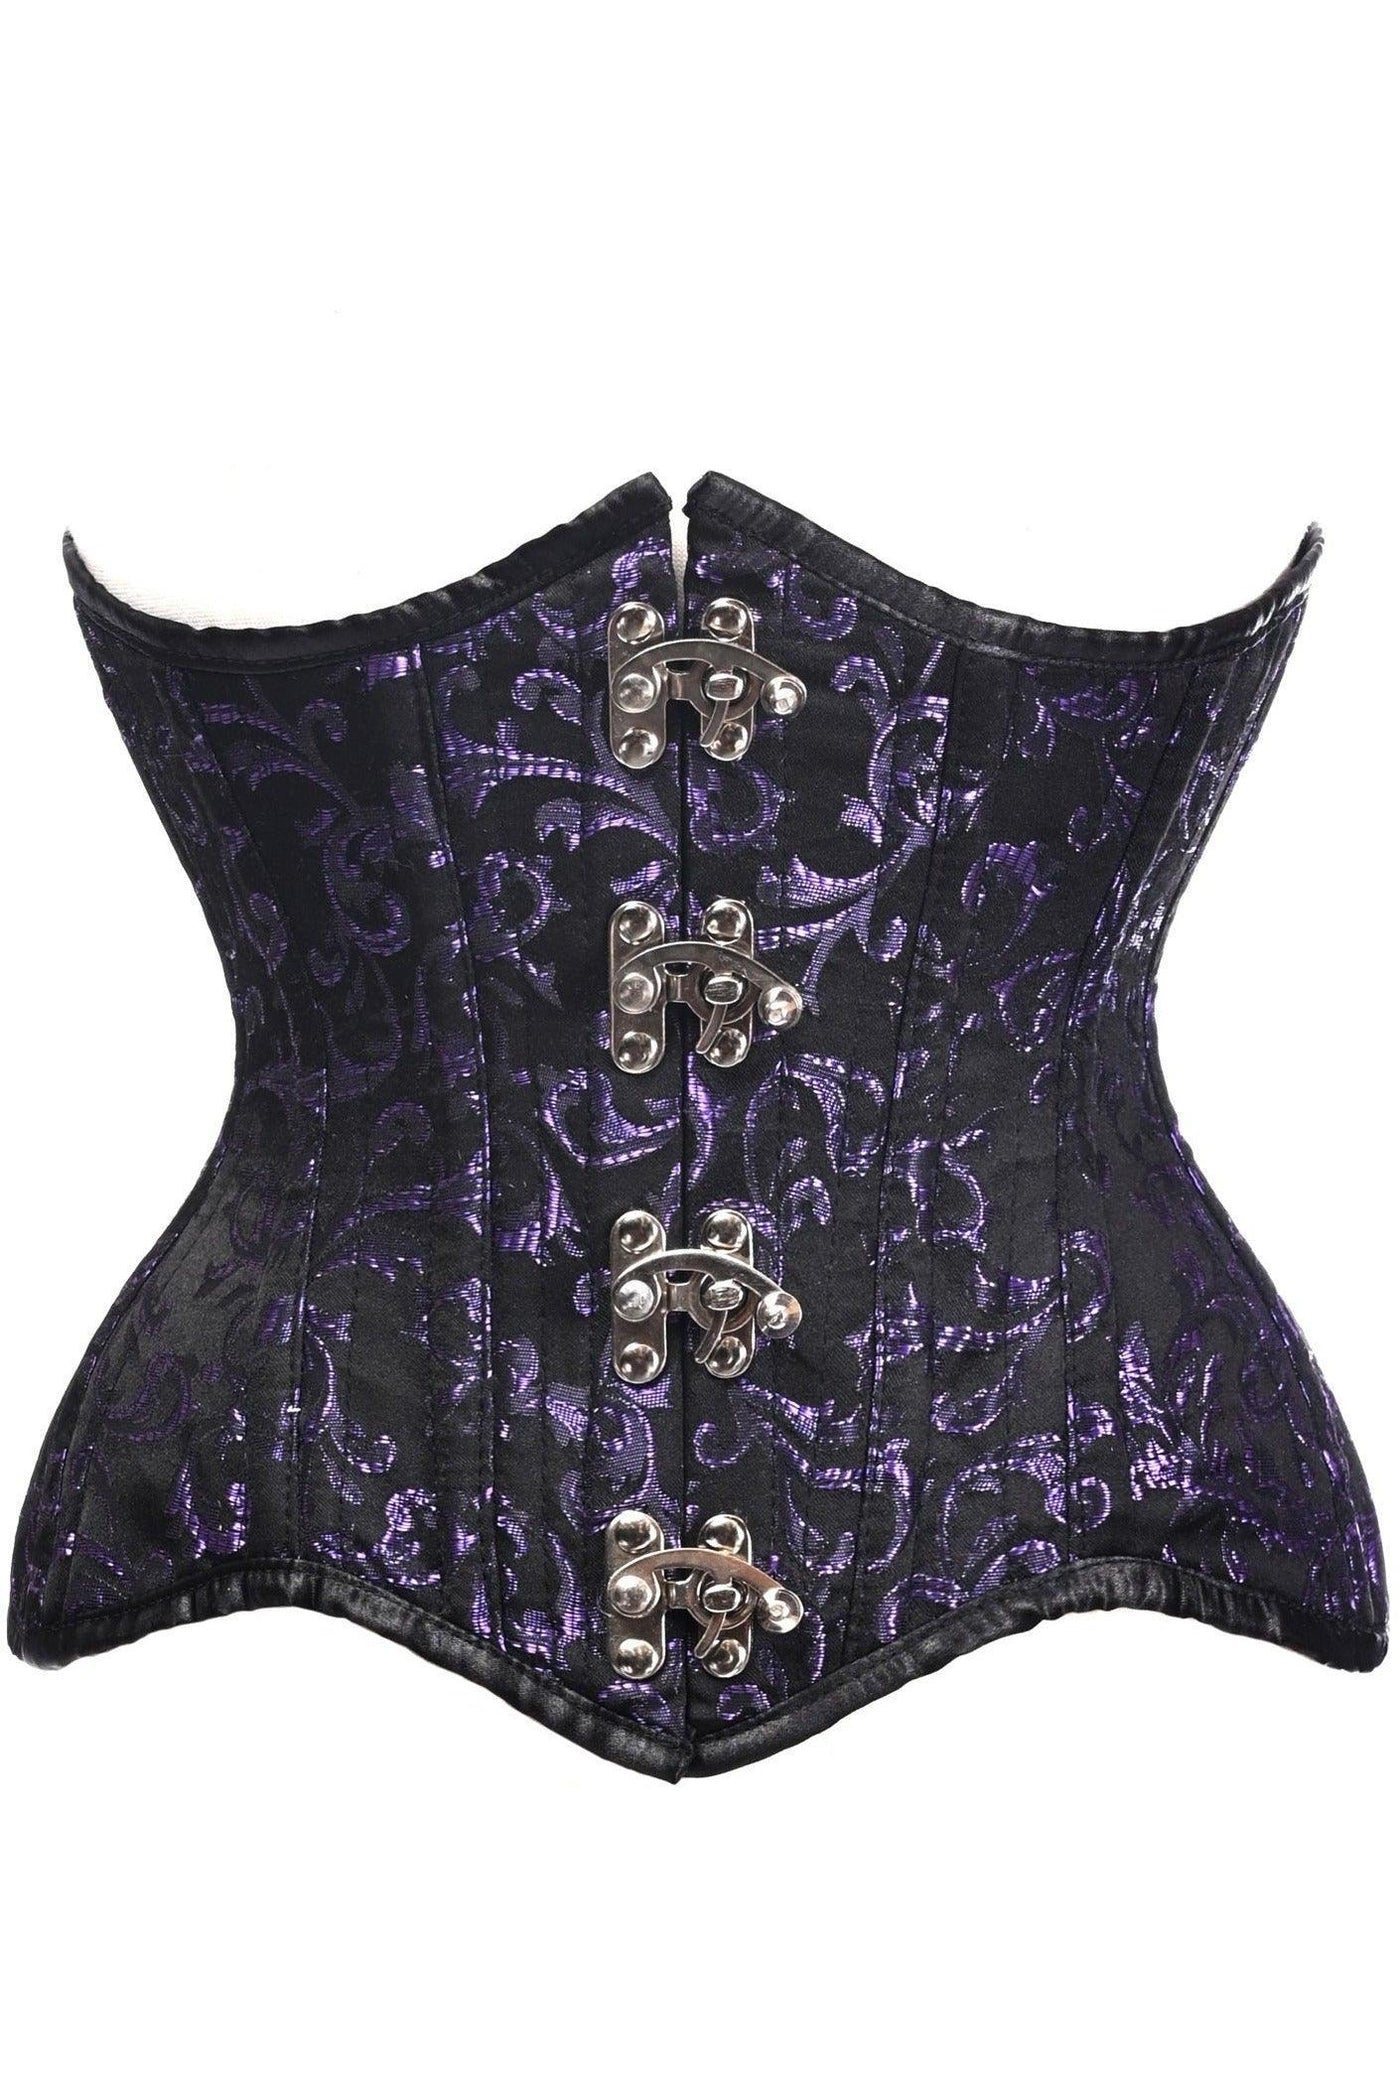 Top Drawer Black/Purple Brocade Double Steel Boned Under Bust Corset - AMIClubwear